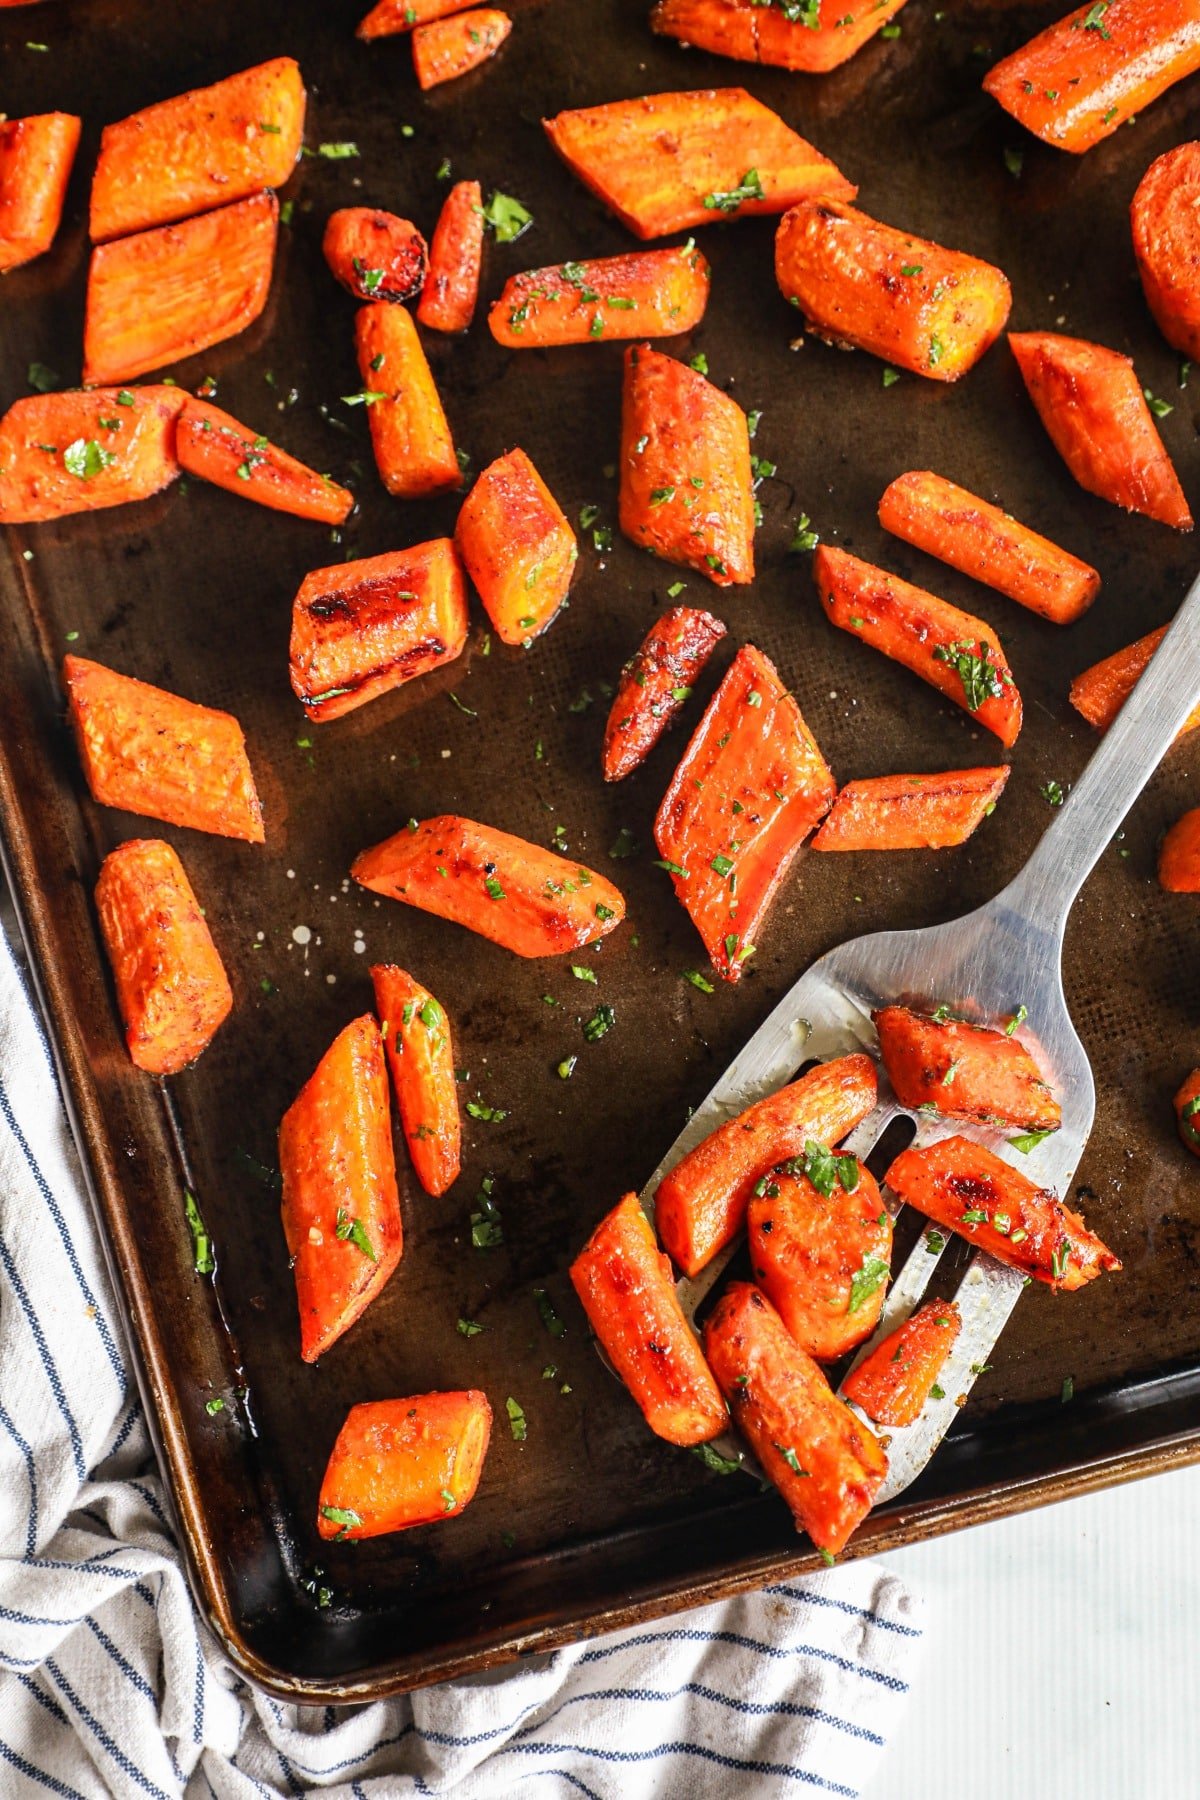 roasted carrots on a baking sheet